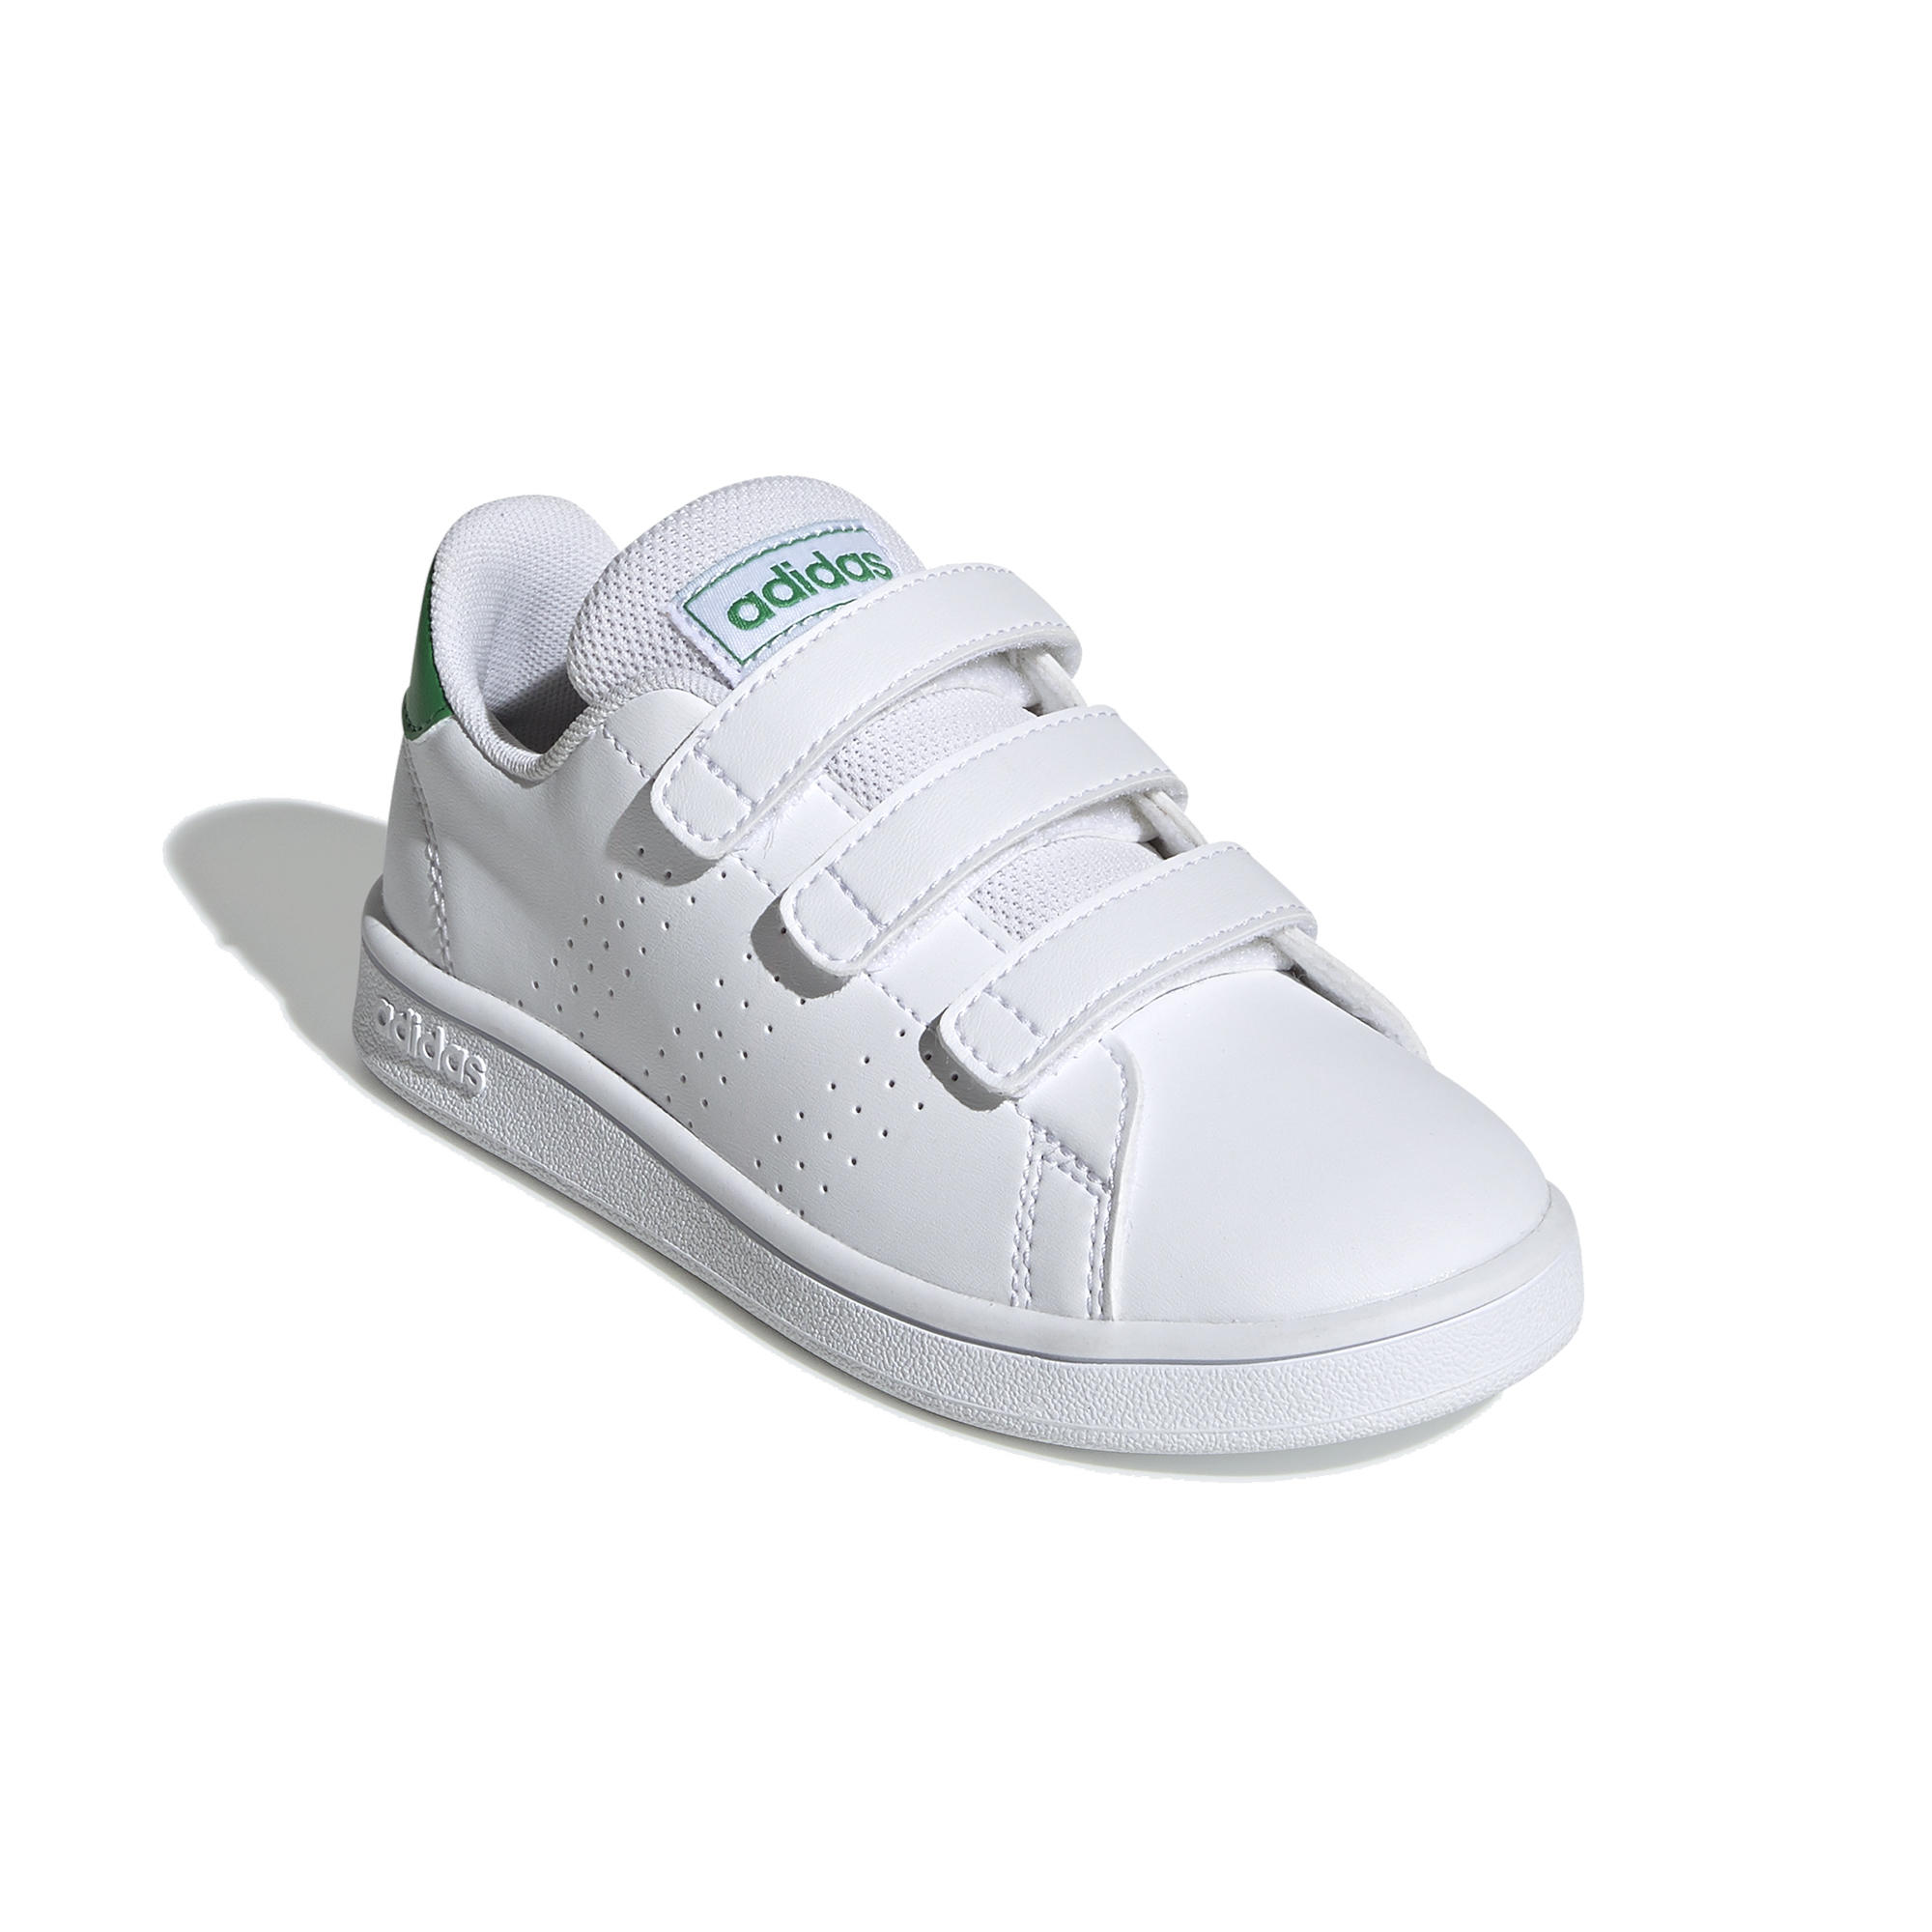 Scarpe tennis bambino adidas ADVANTAGE CLEAN bianco-verde هاش